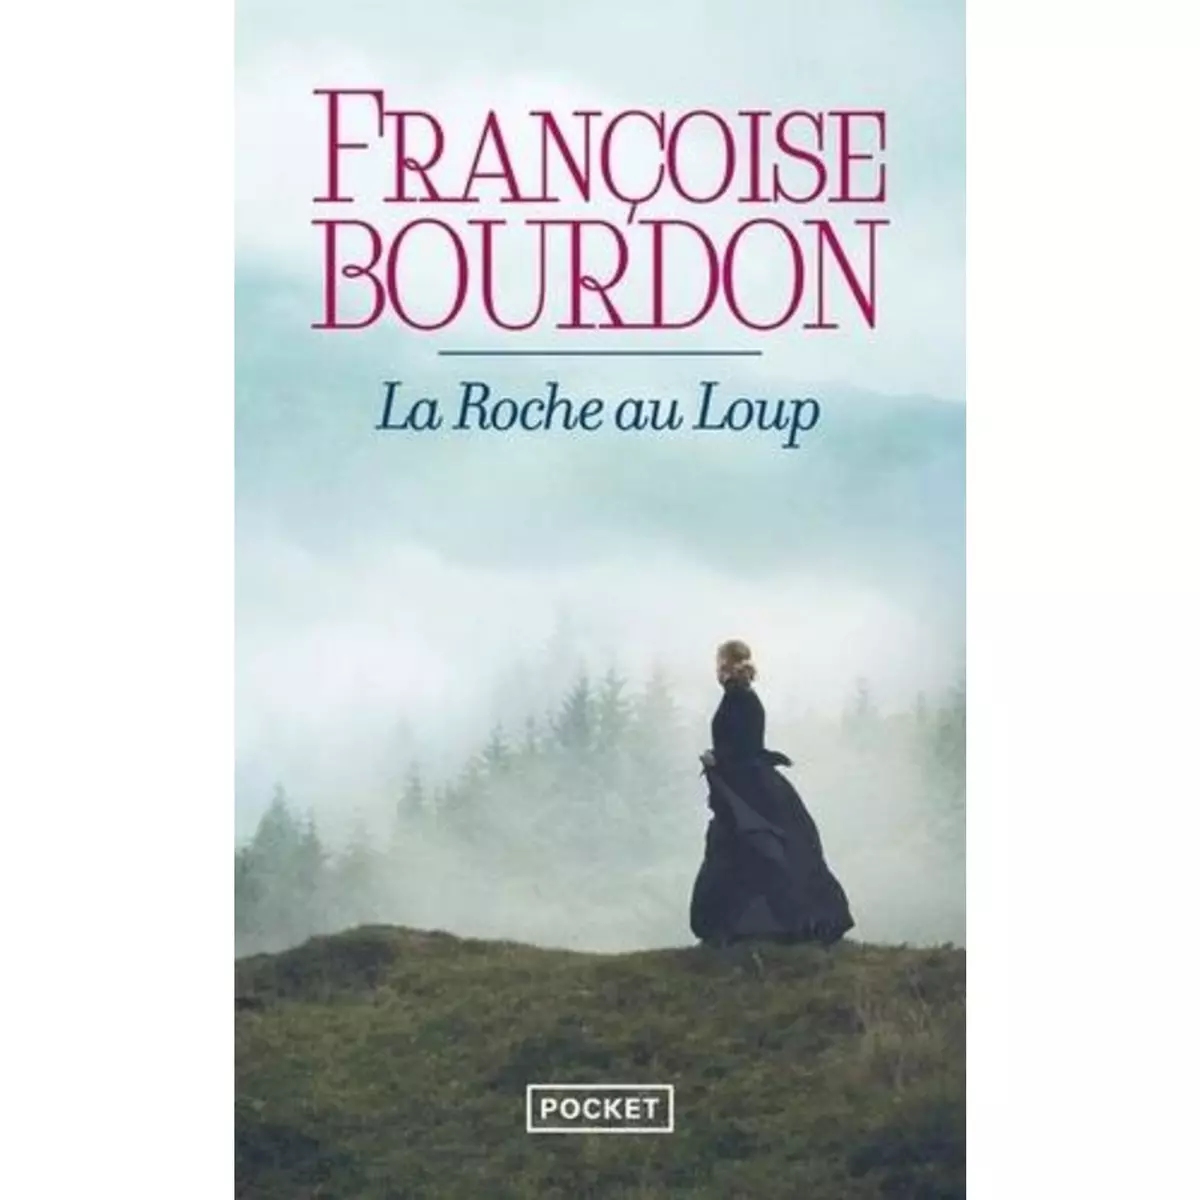  LA ROCHE AU LOUP, Bourdon Françoise